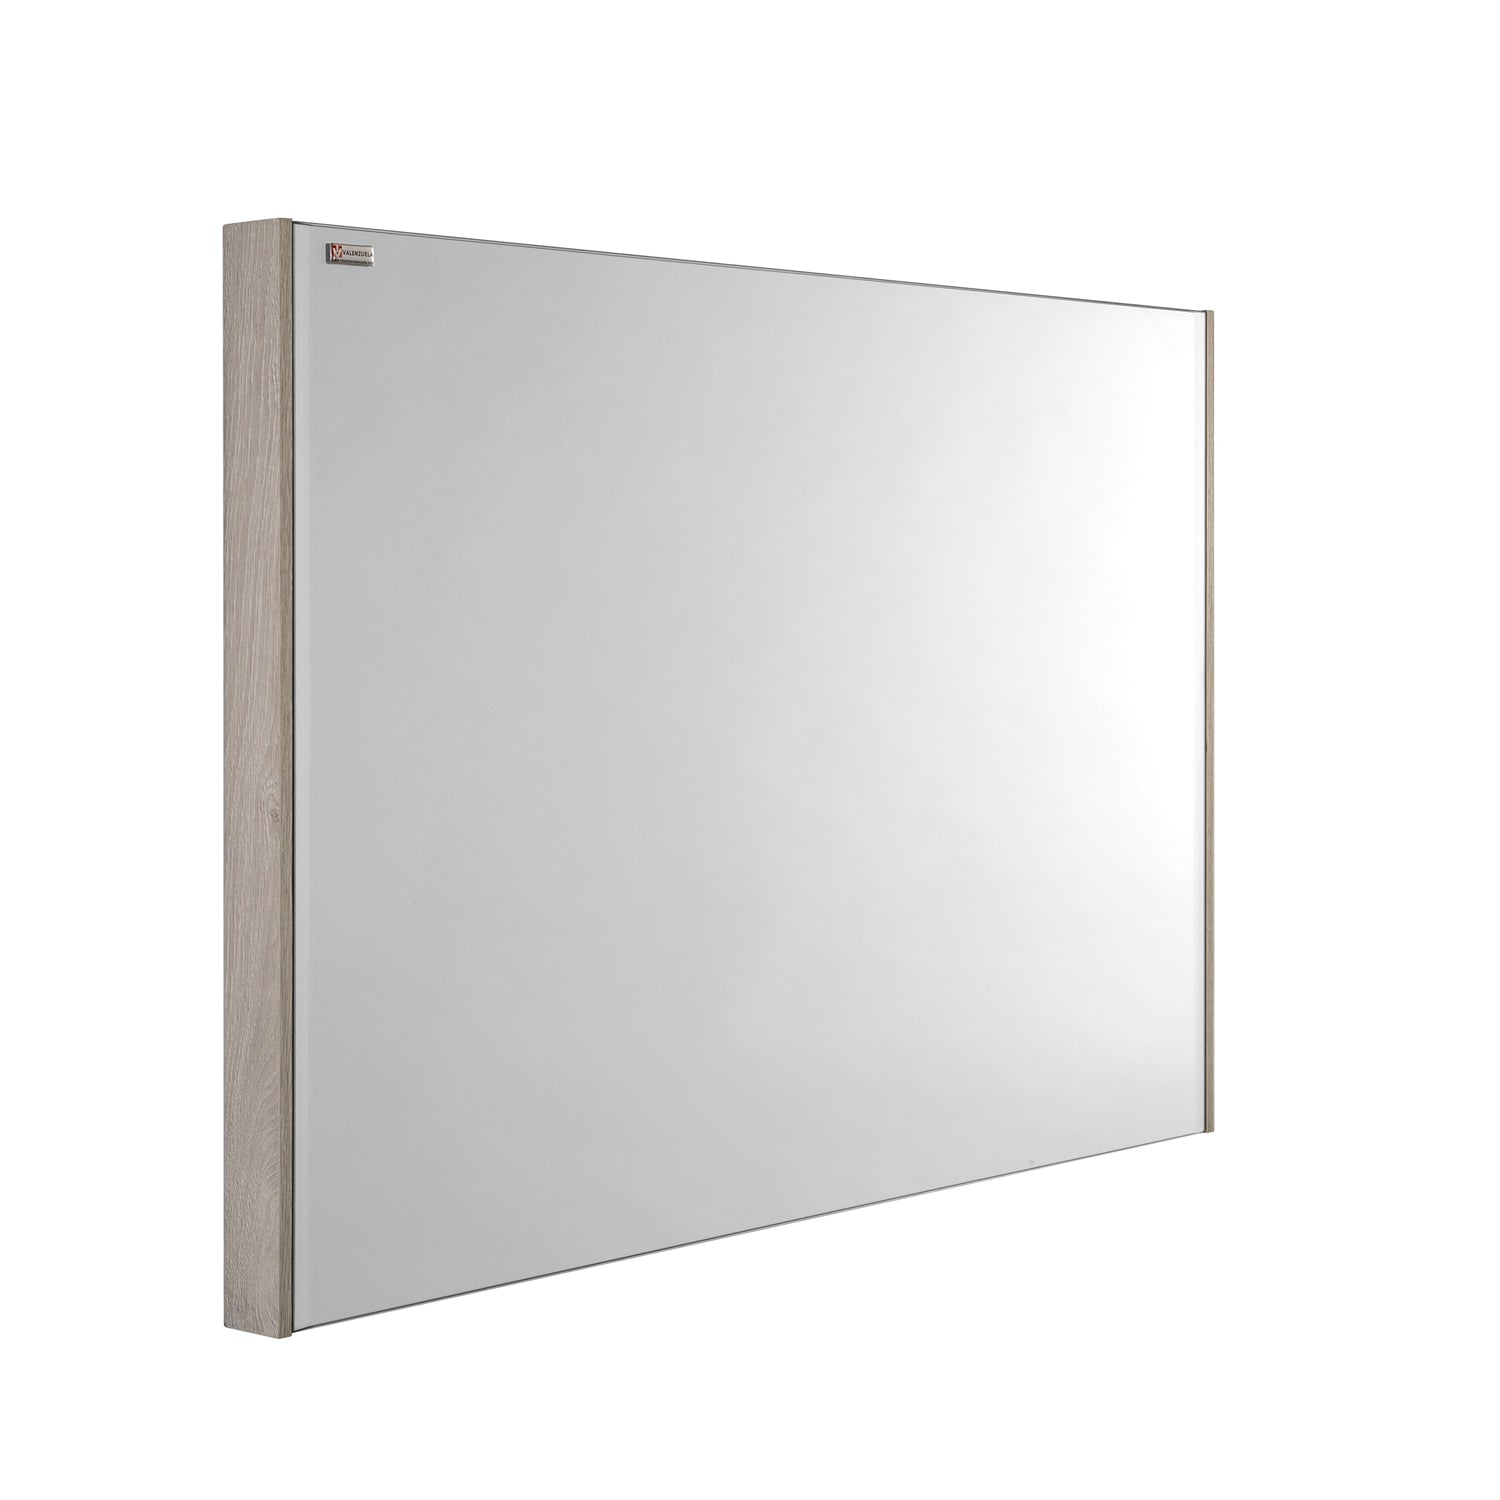 24" Slim Frame Bathroom Vanity Mirror, Wall Mount, Cloud, Serie Barcelona by VALENZUELA